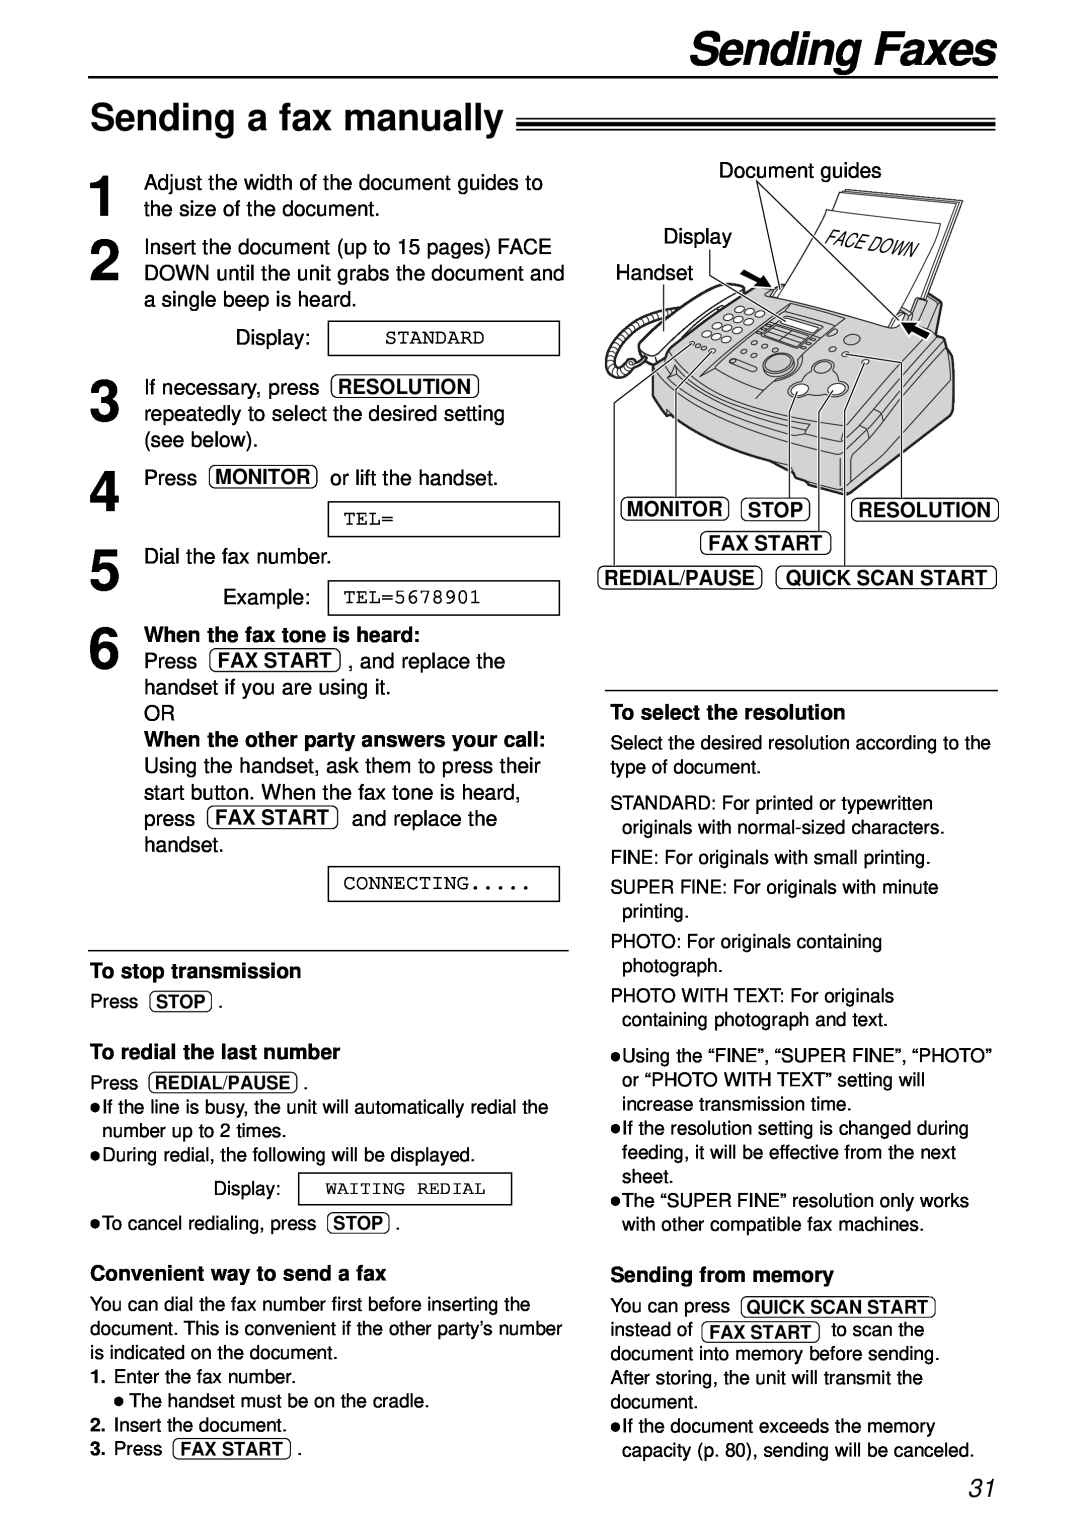 Panasonic KX-FL501 Sending Faxes, Sending a fax manually, Resolution, When the fax tone is heard, Fax Start 